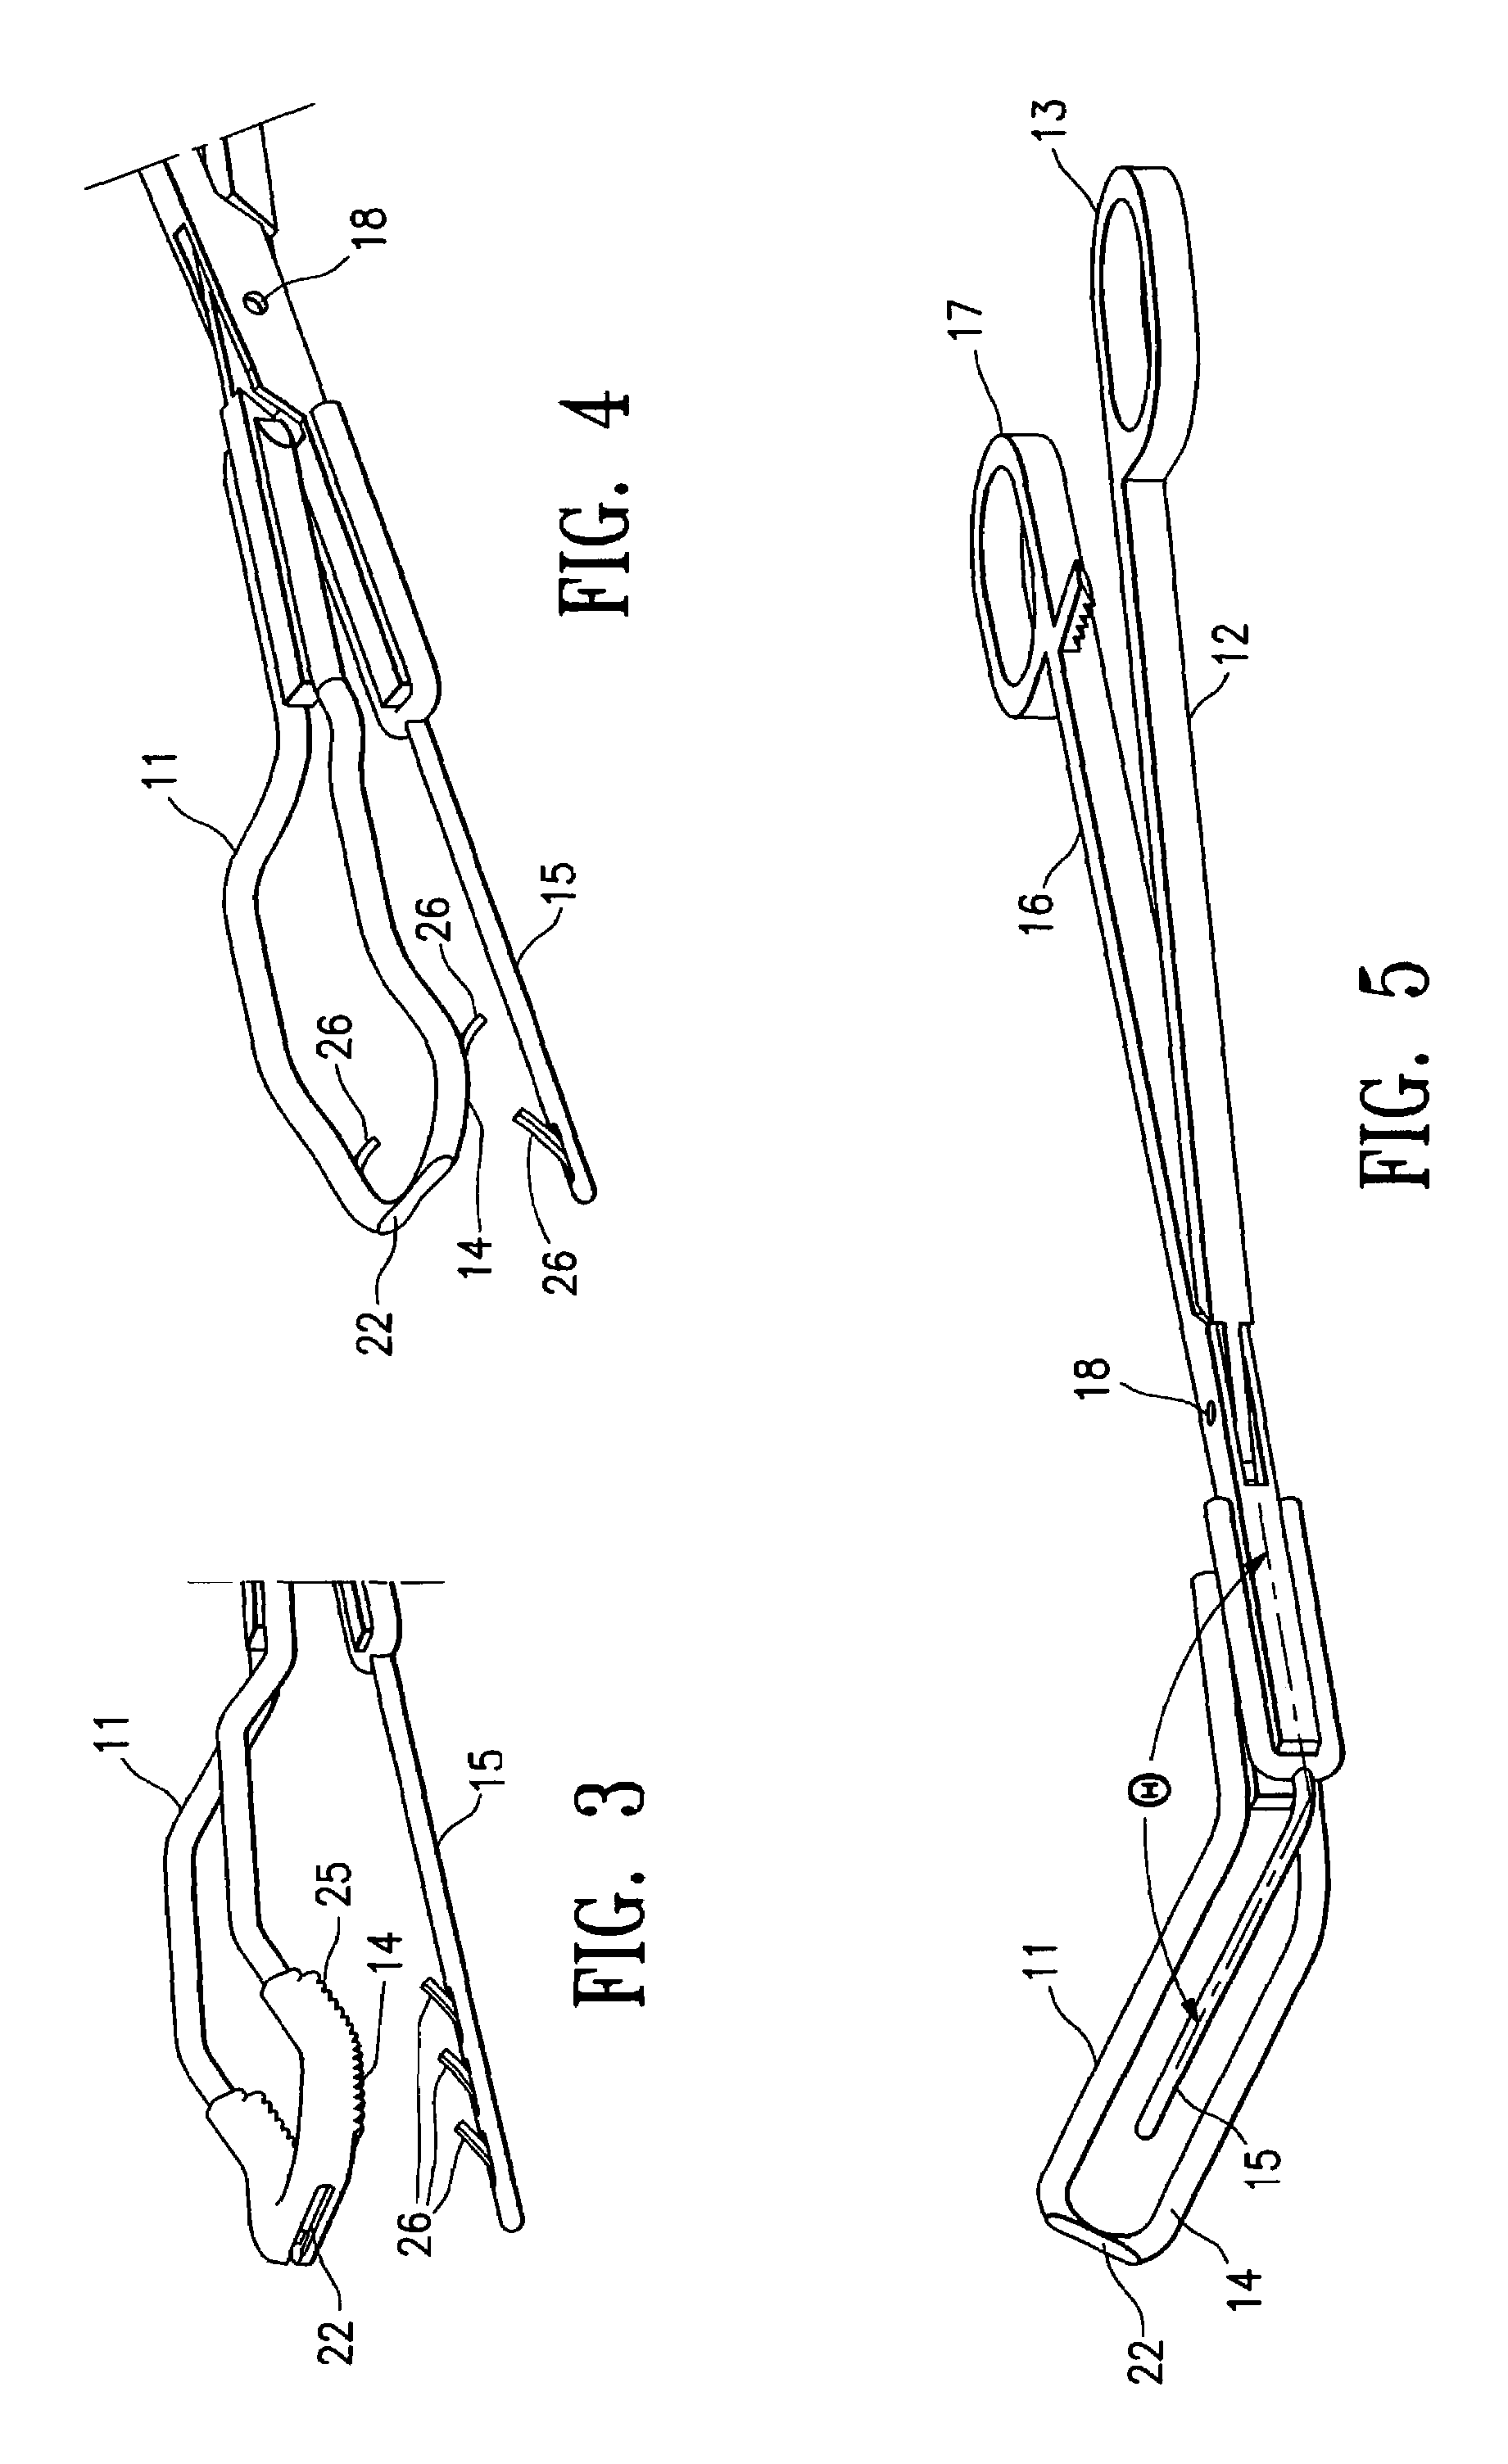 Uterine artery occlusion clamp